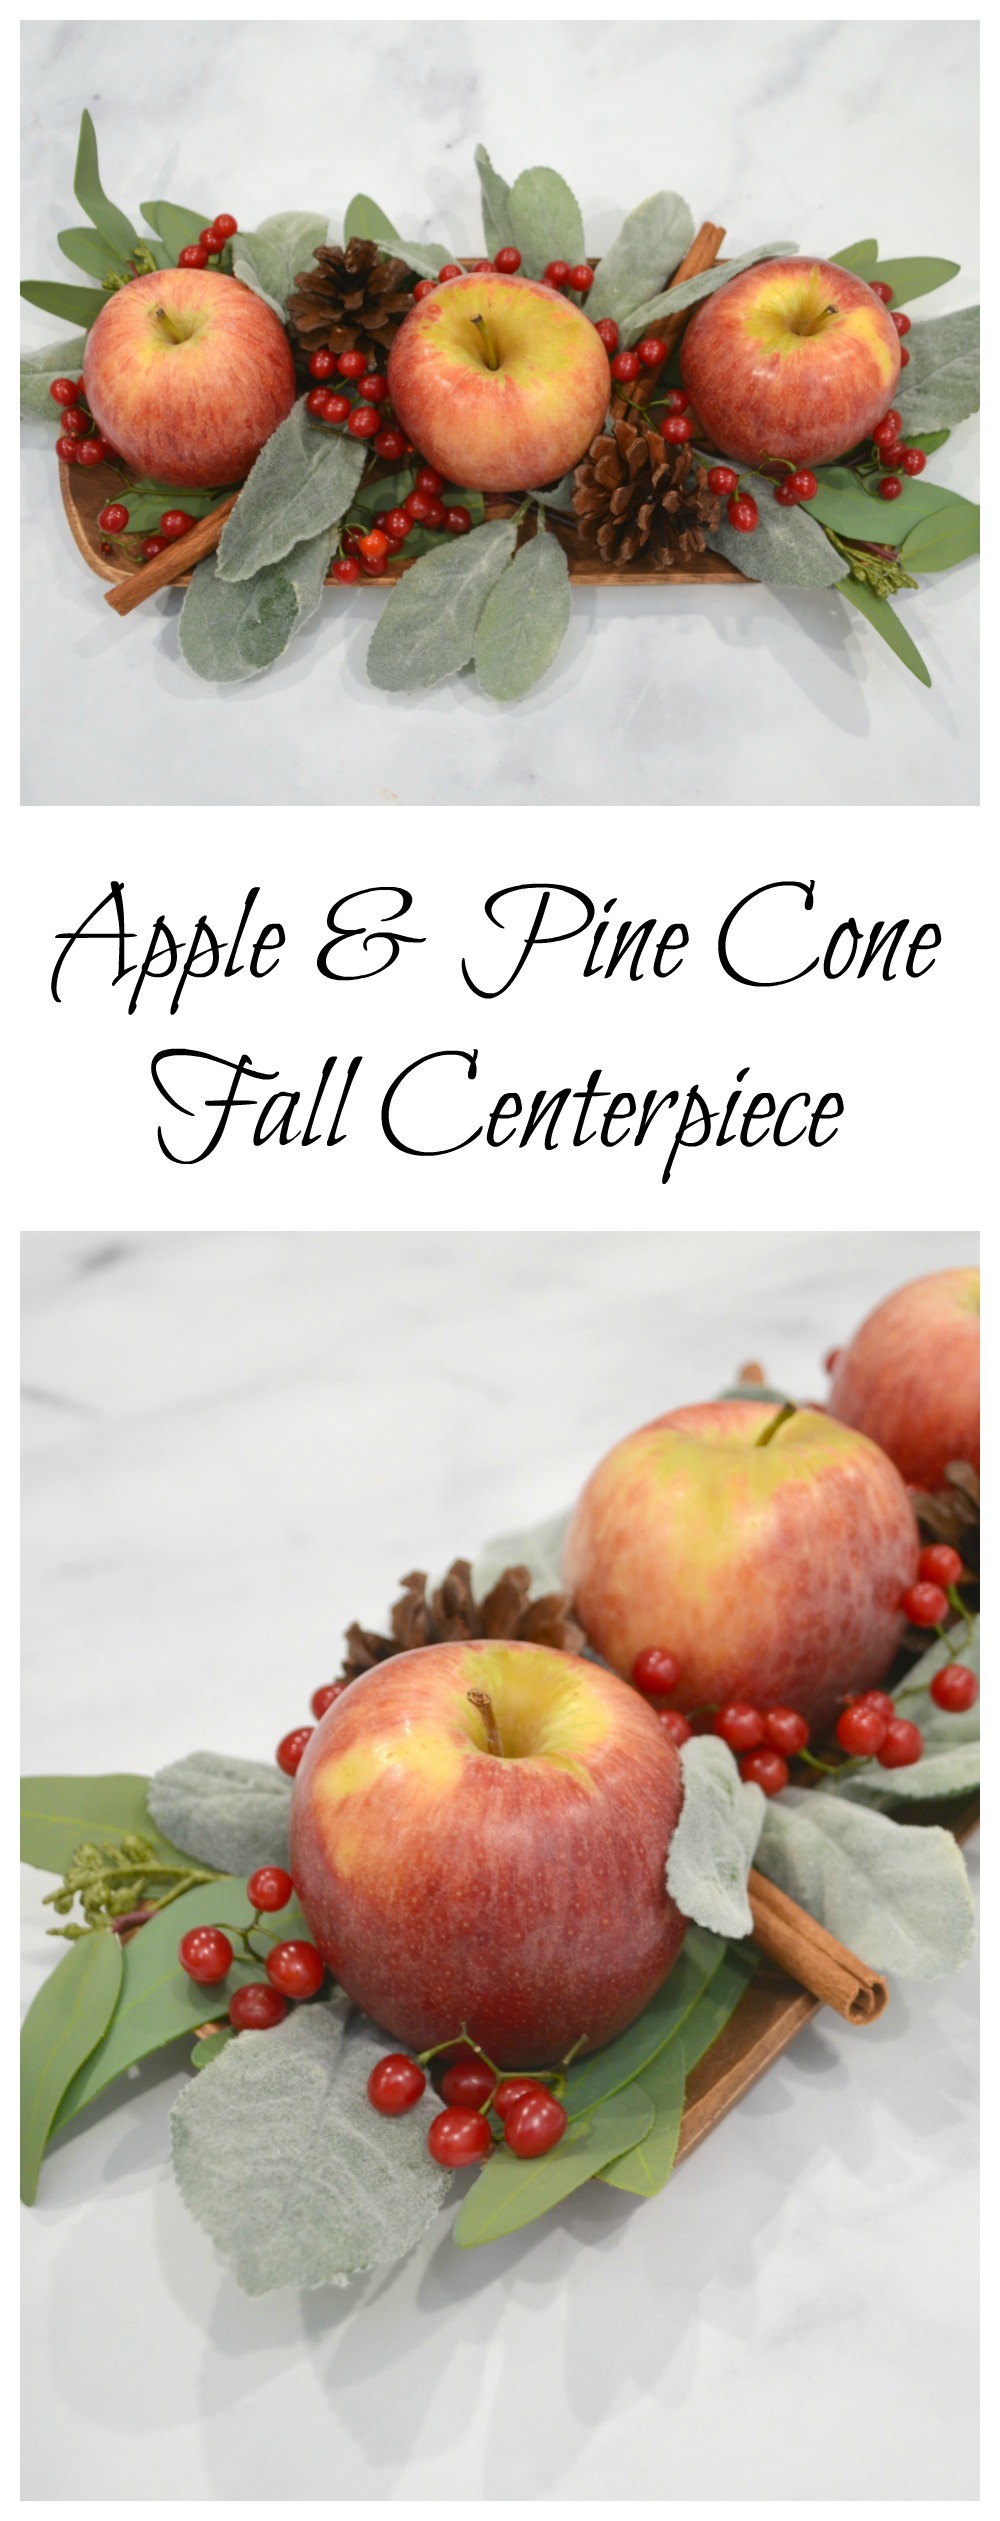 Apple & Pine Cone Fall Centerpiece